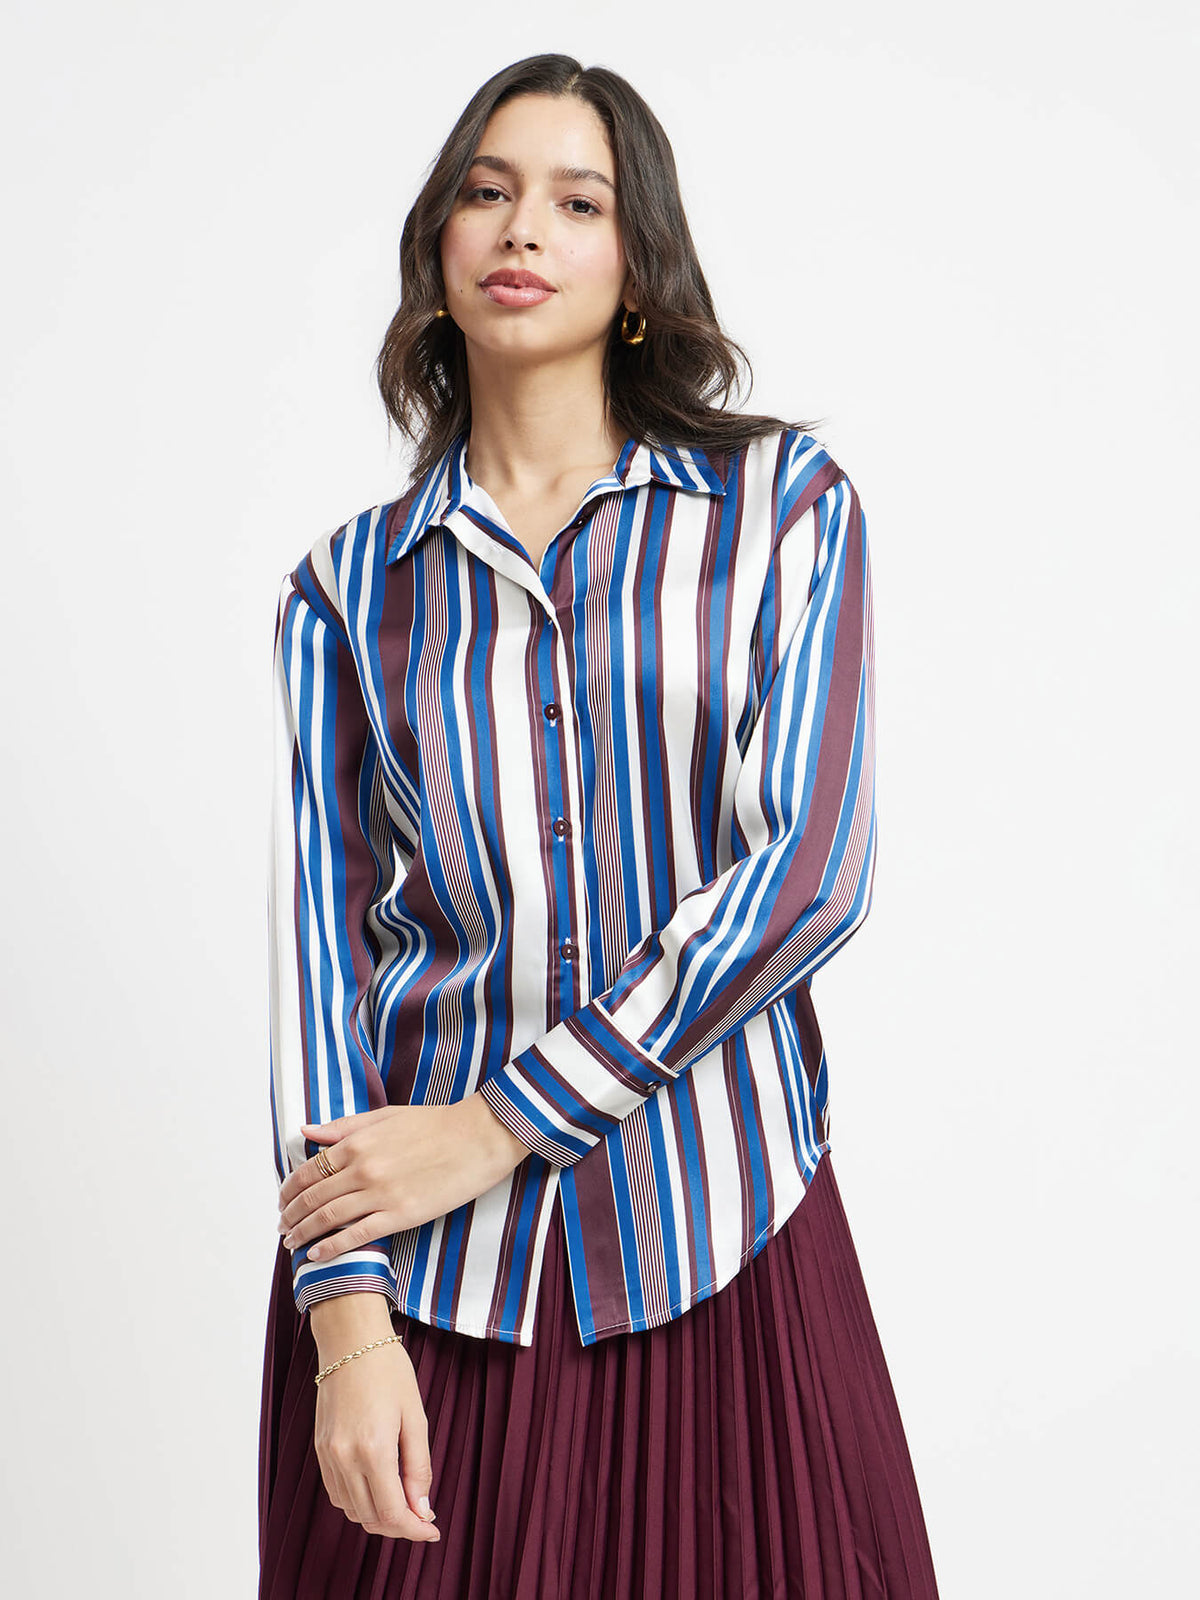 Satin Stripes Shirt - Navy And Maroon